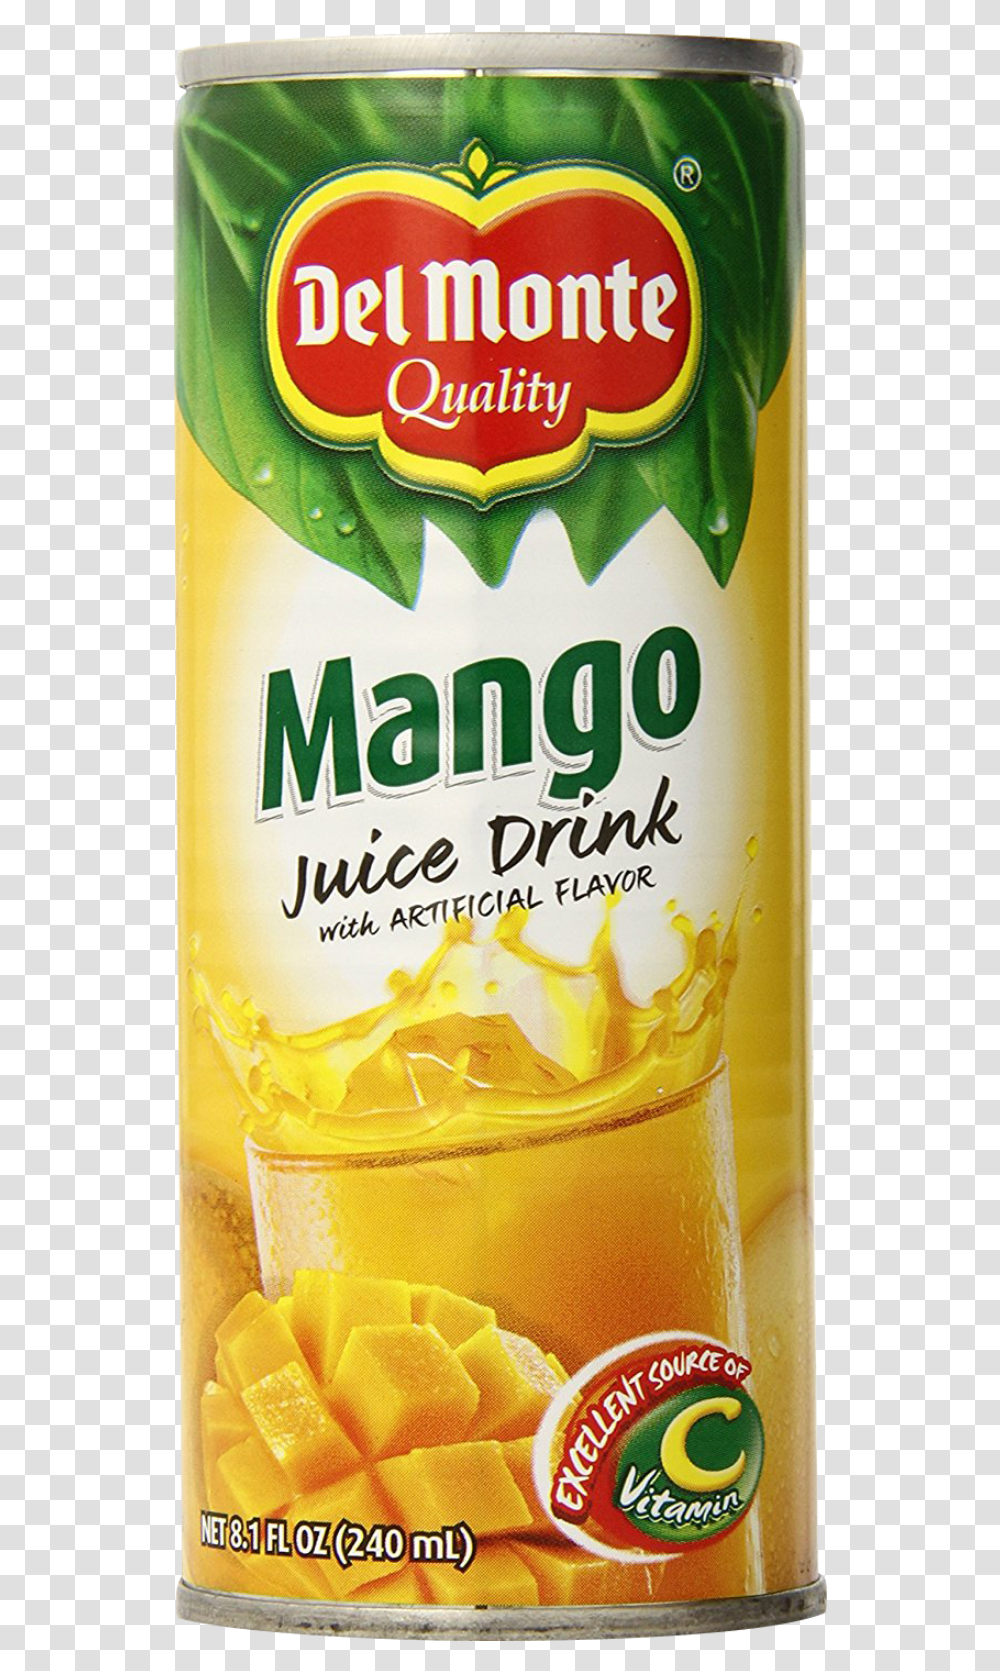 Del Monte Mango Juice 240ml Mango Juice In Can Del Monte, Beverage, Drink, Beer, Alcohol Transparent Png